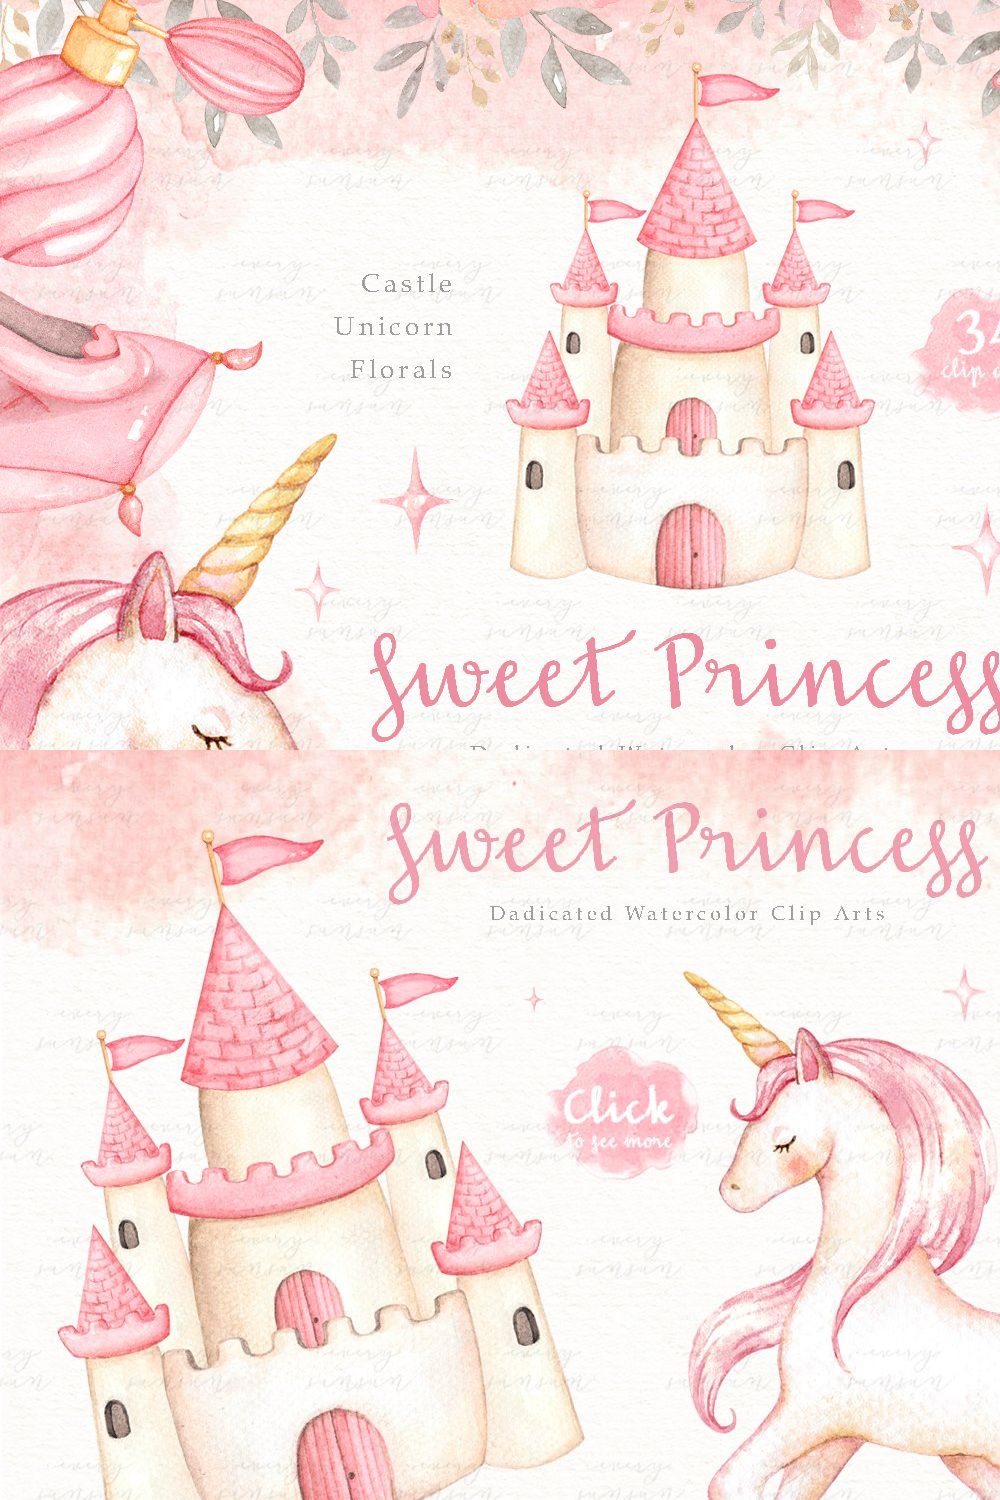 Sweet Princess Watercolor Clip Arts pinterest preview image.